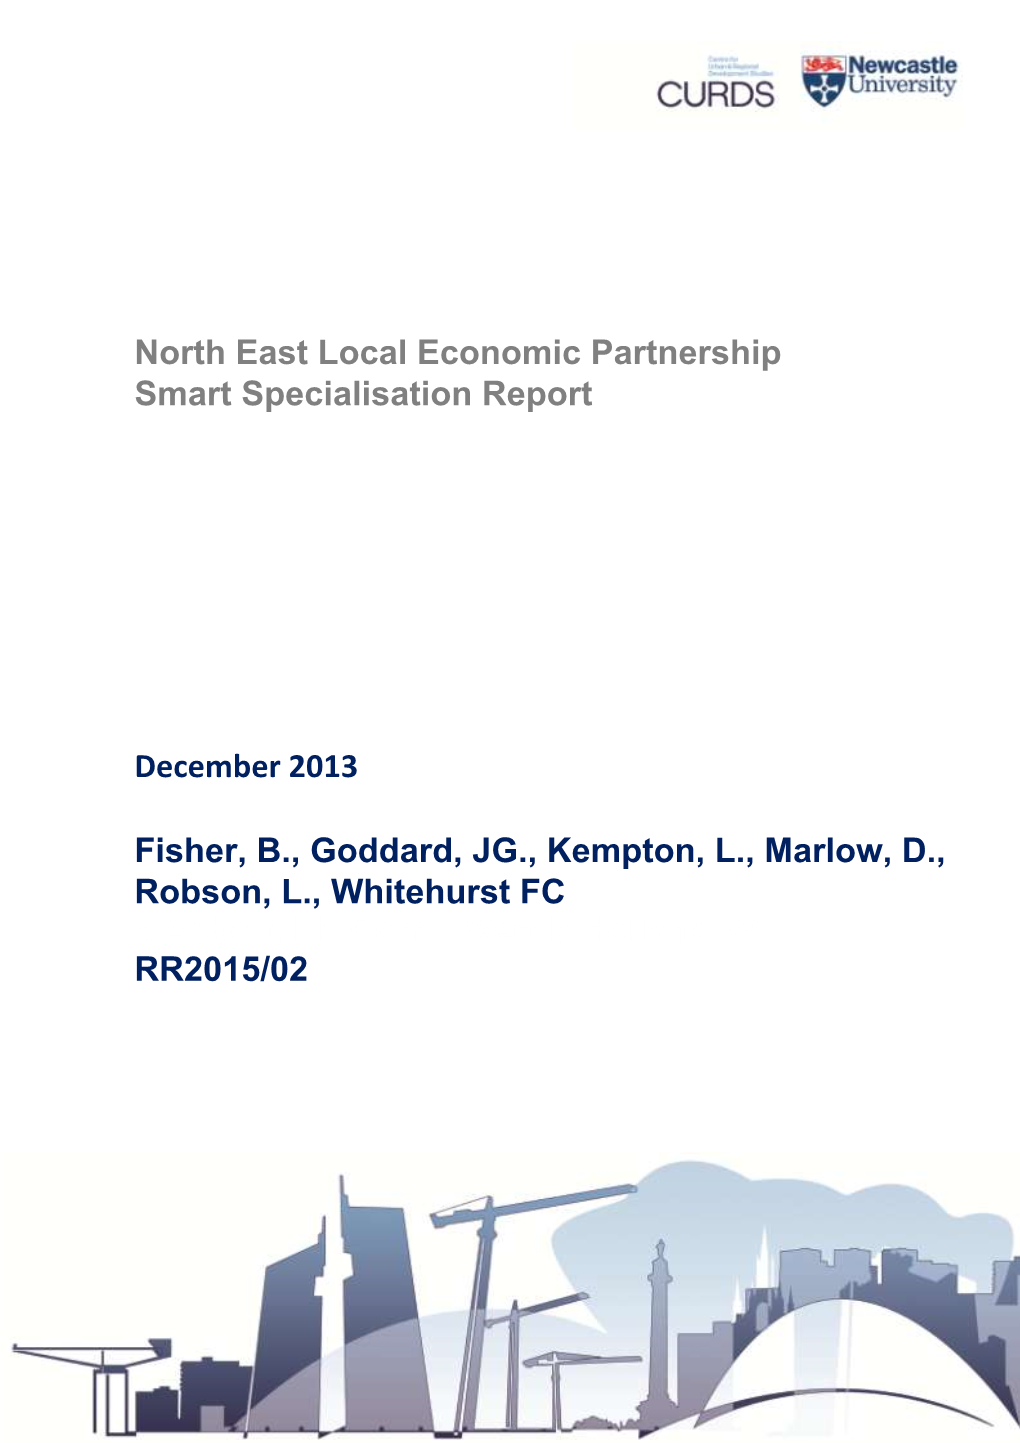 North East Local Economic Partnership Smart Specialisation Report